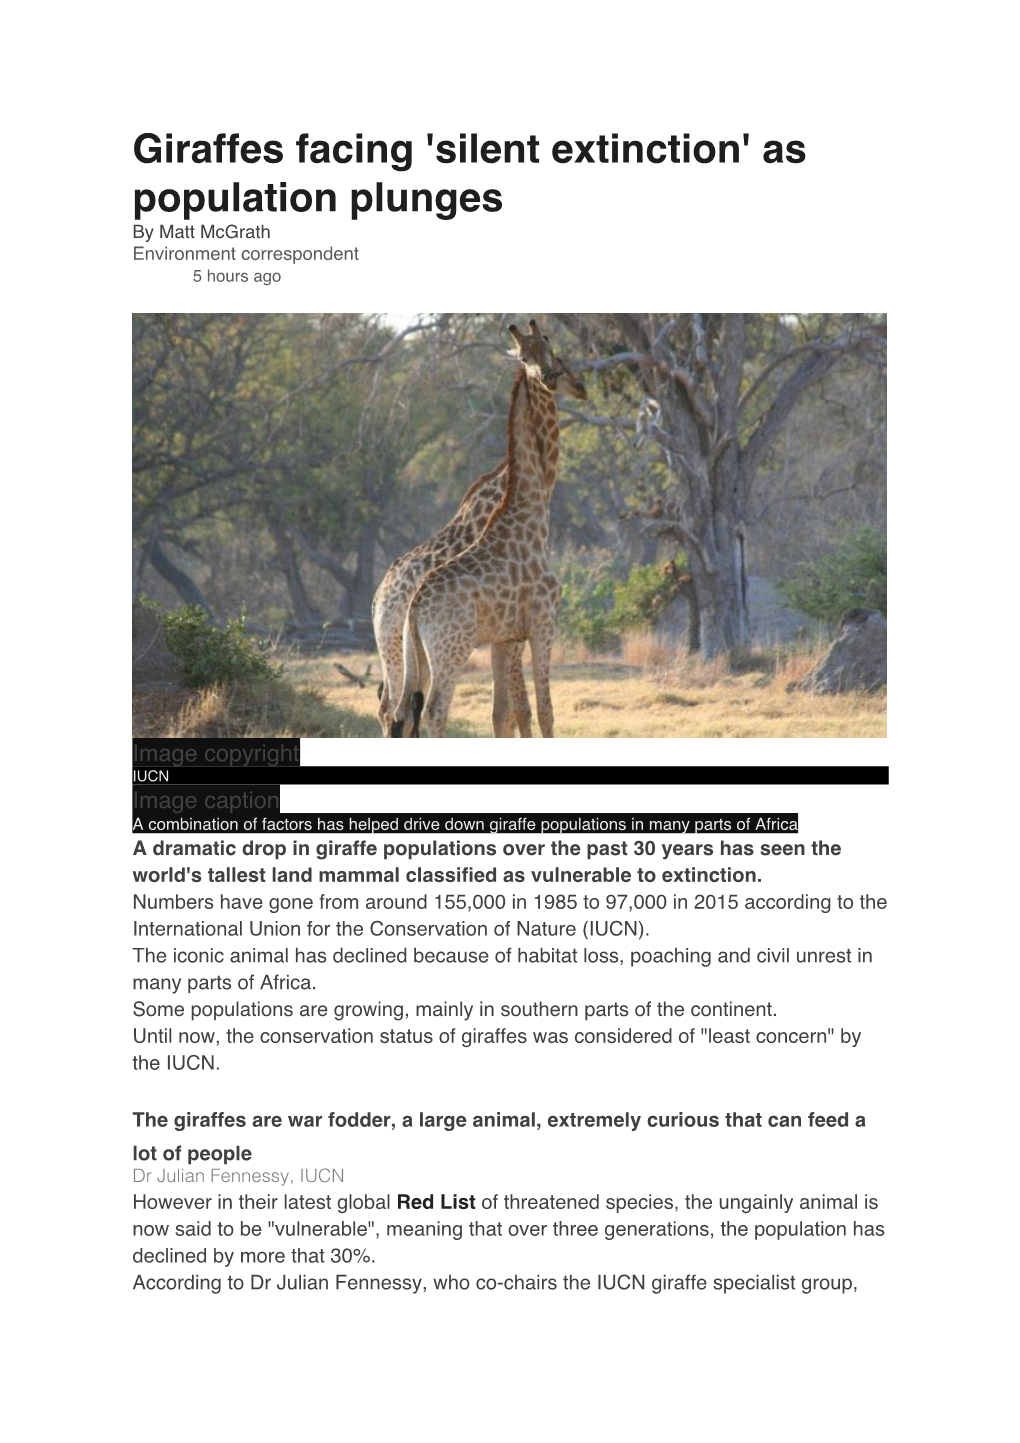 Giraffes Facing 'Silent Extinction' As Population Plunges by Matt Mcgrath Environment Correspondent 5 Hours Ago